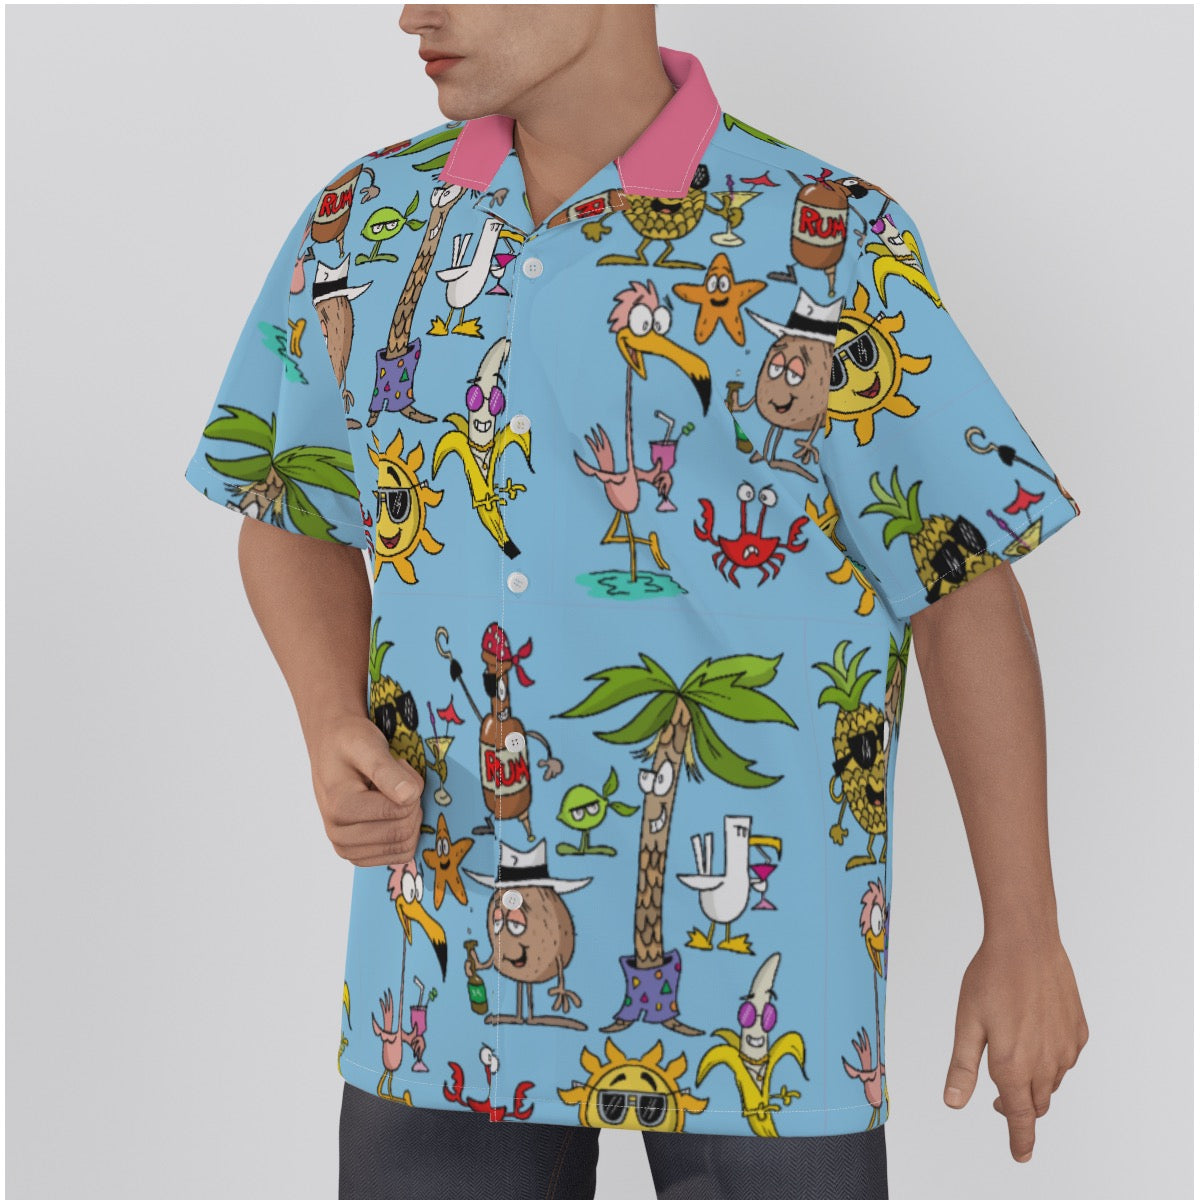 Beach Party Shirt